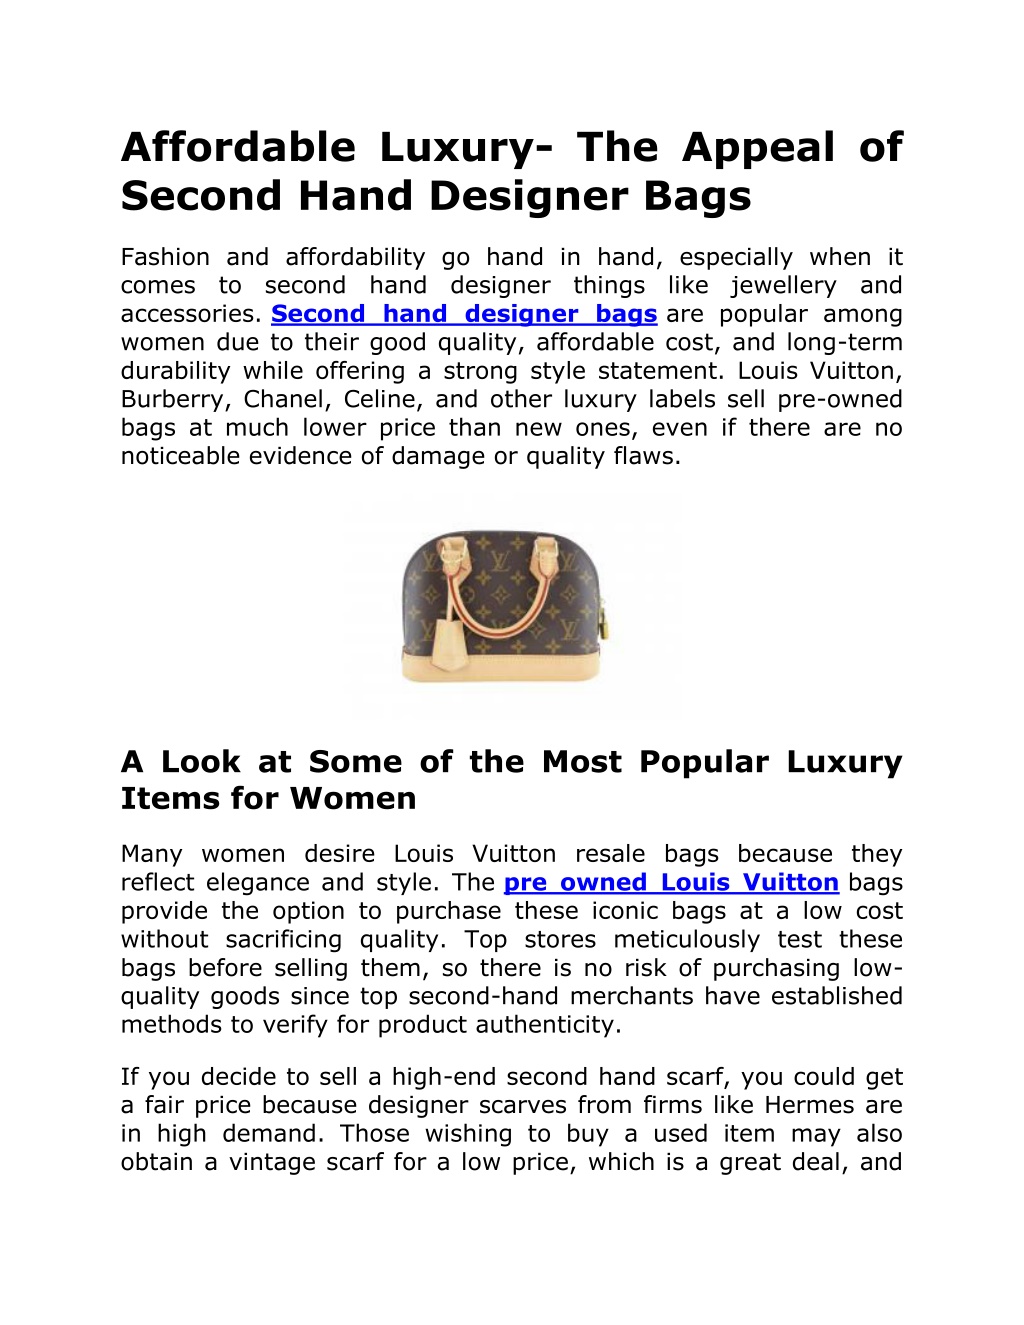 second hand designer bags